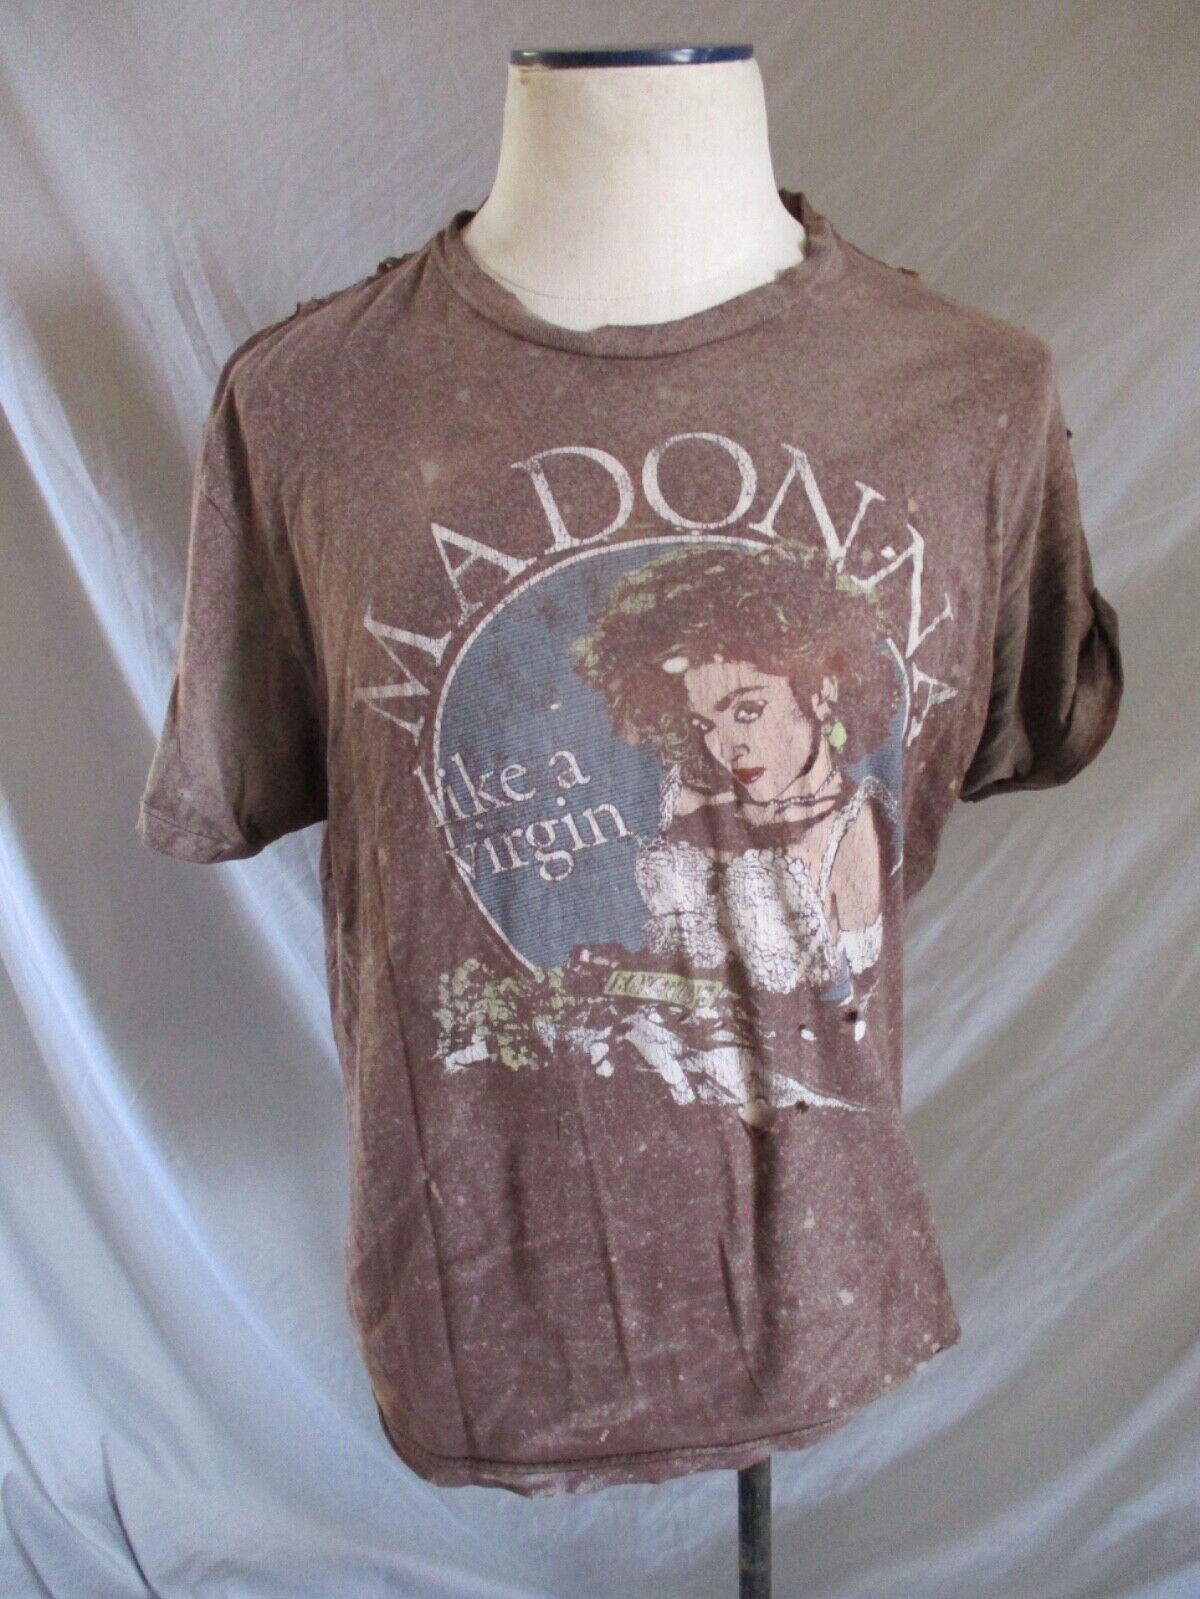 Madonna Like a Virgin world tour 1985 vintage destroyed t-shirt XL